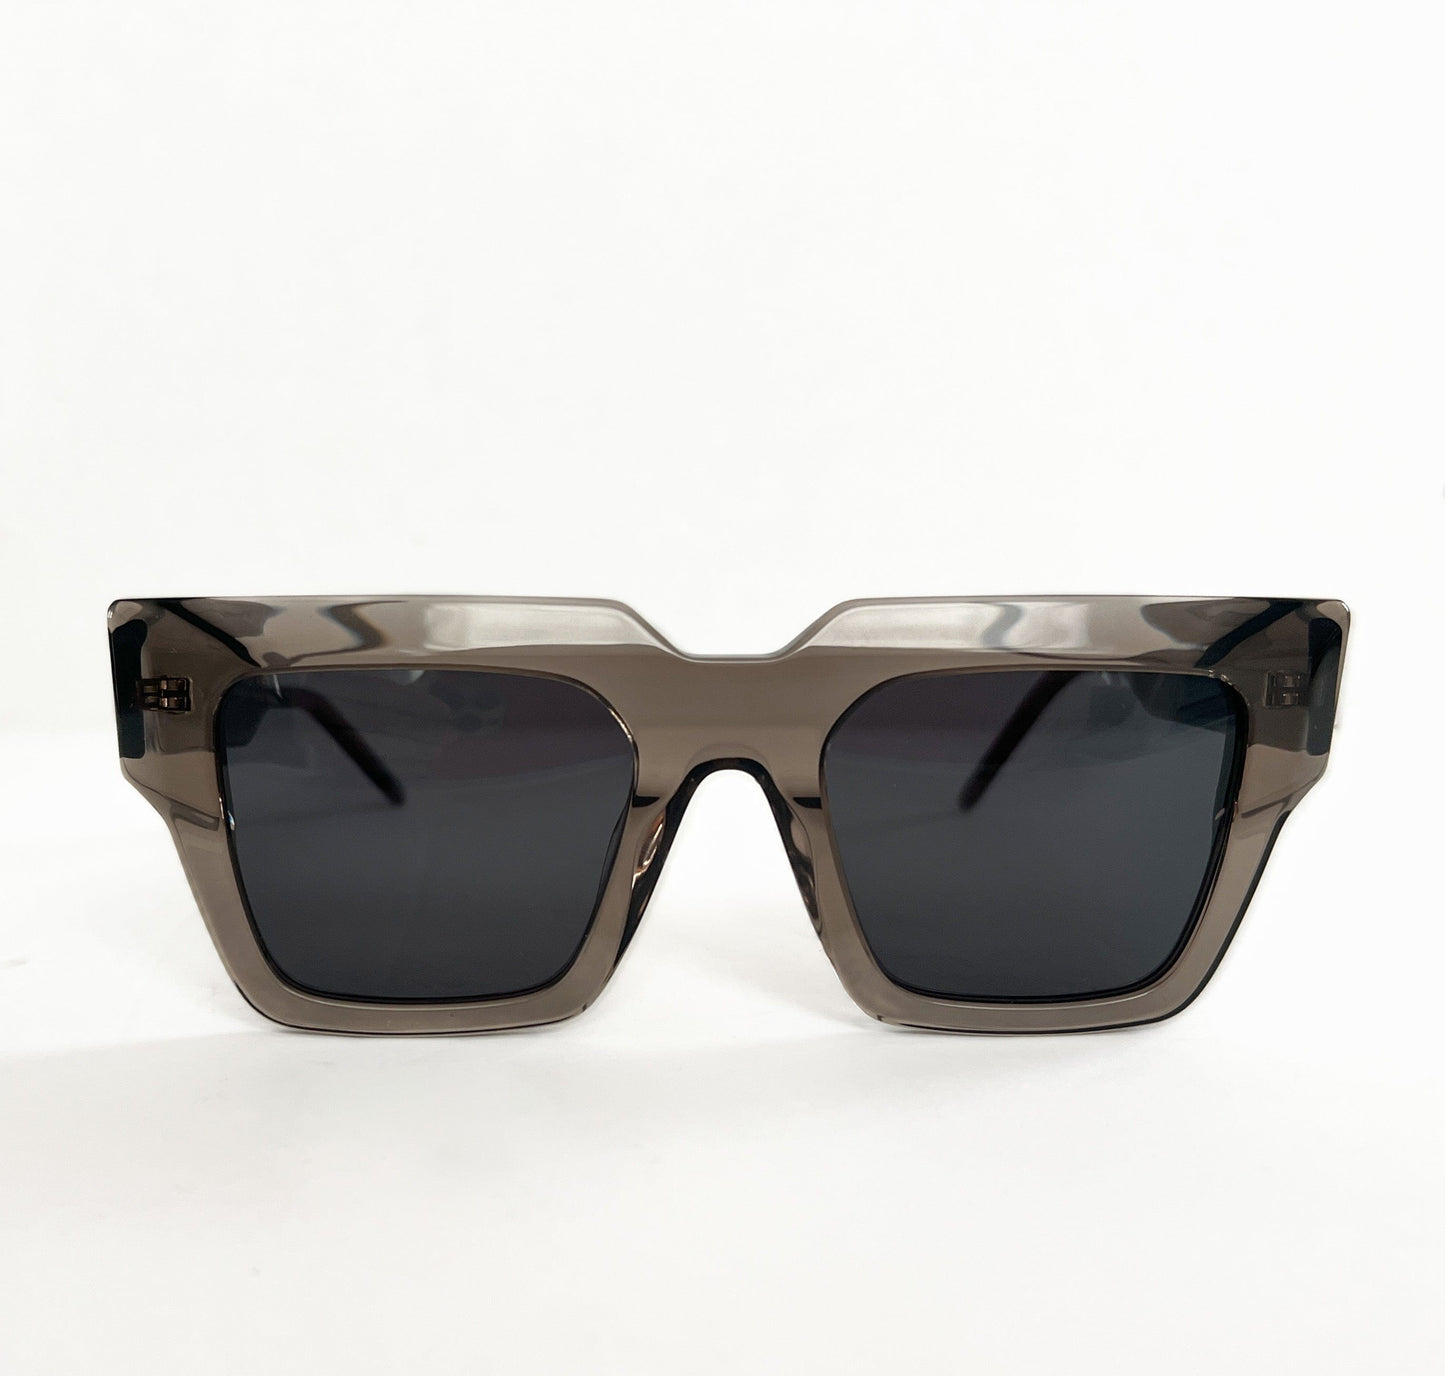 Grey polarized square frame sunglasses